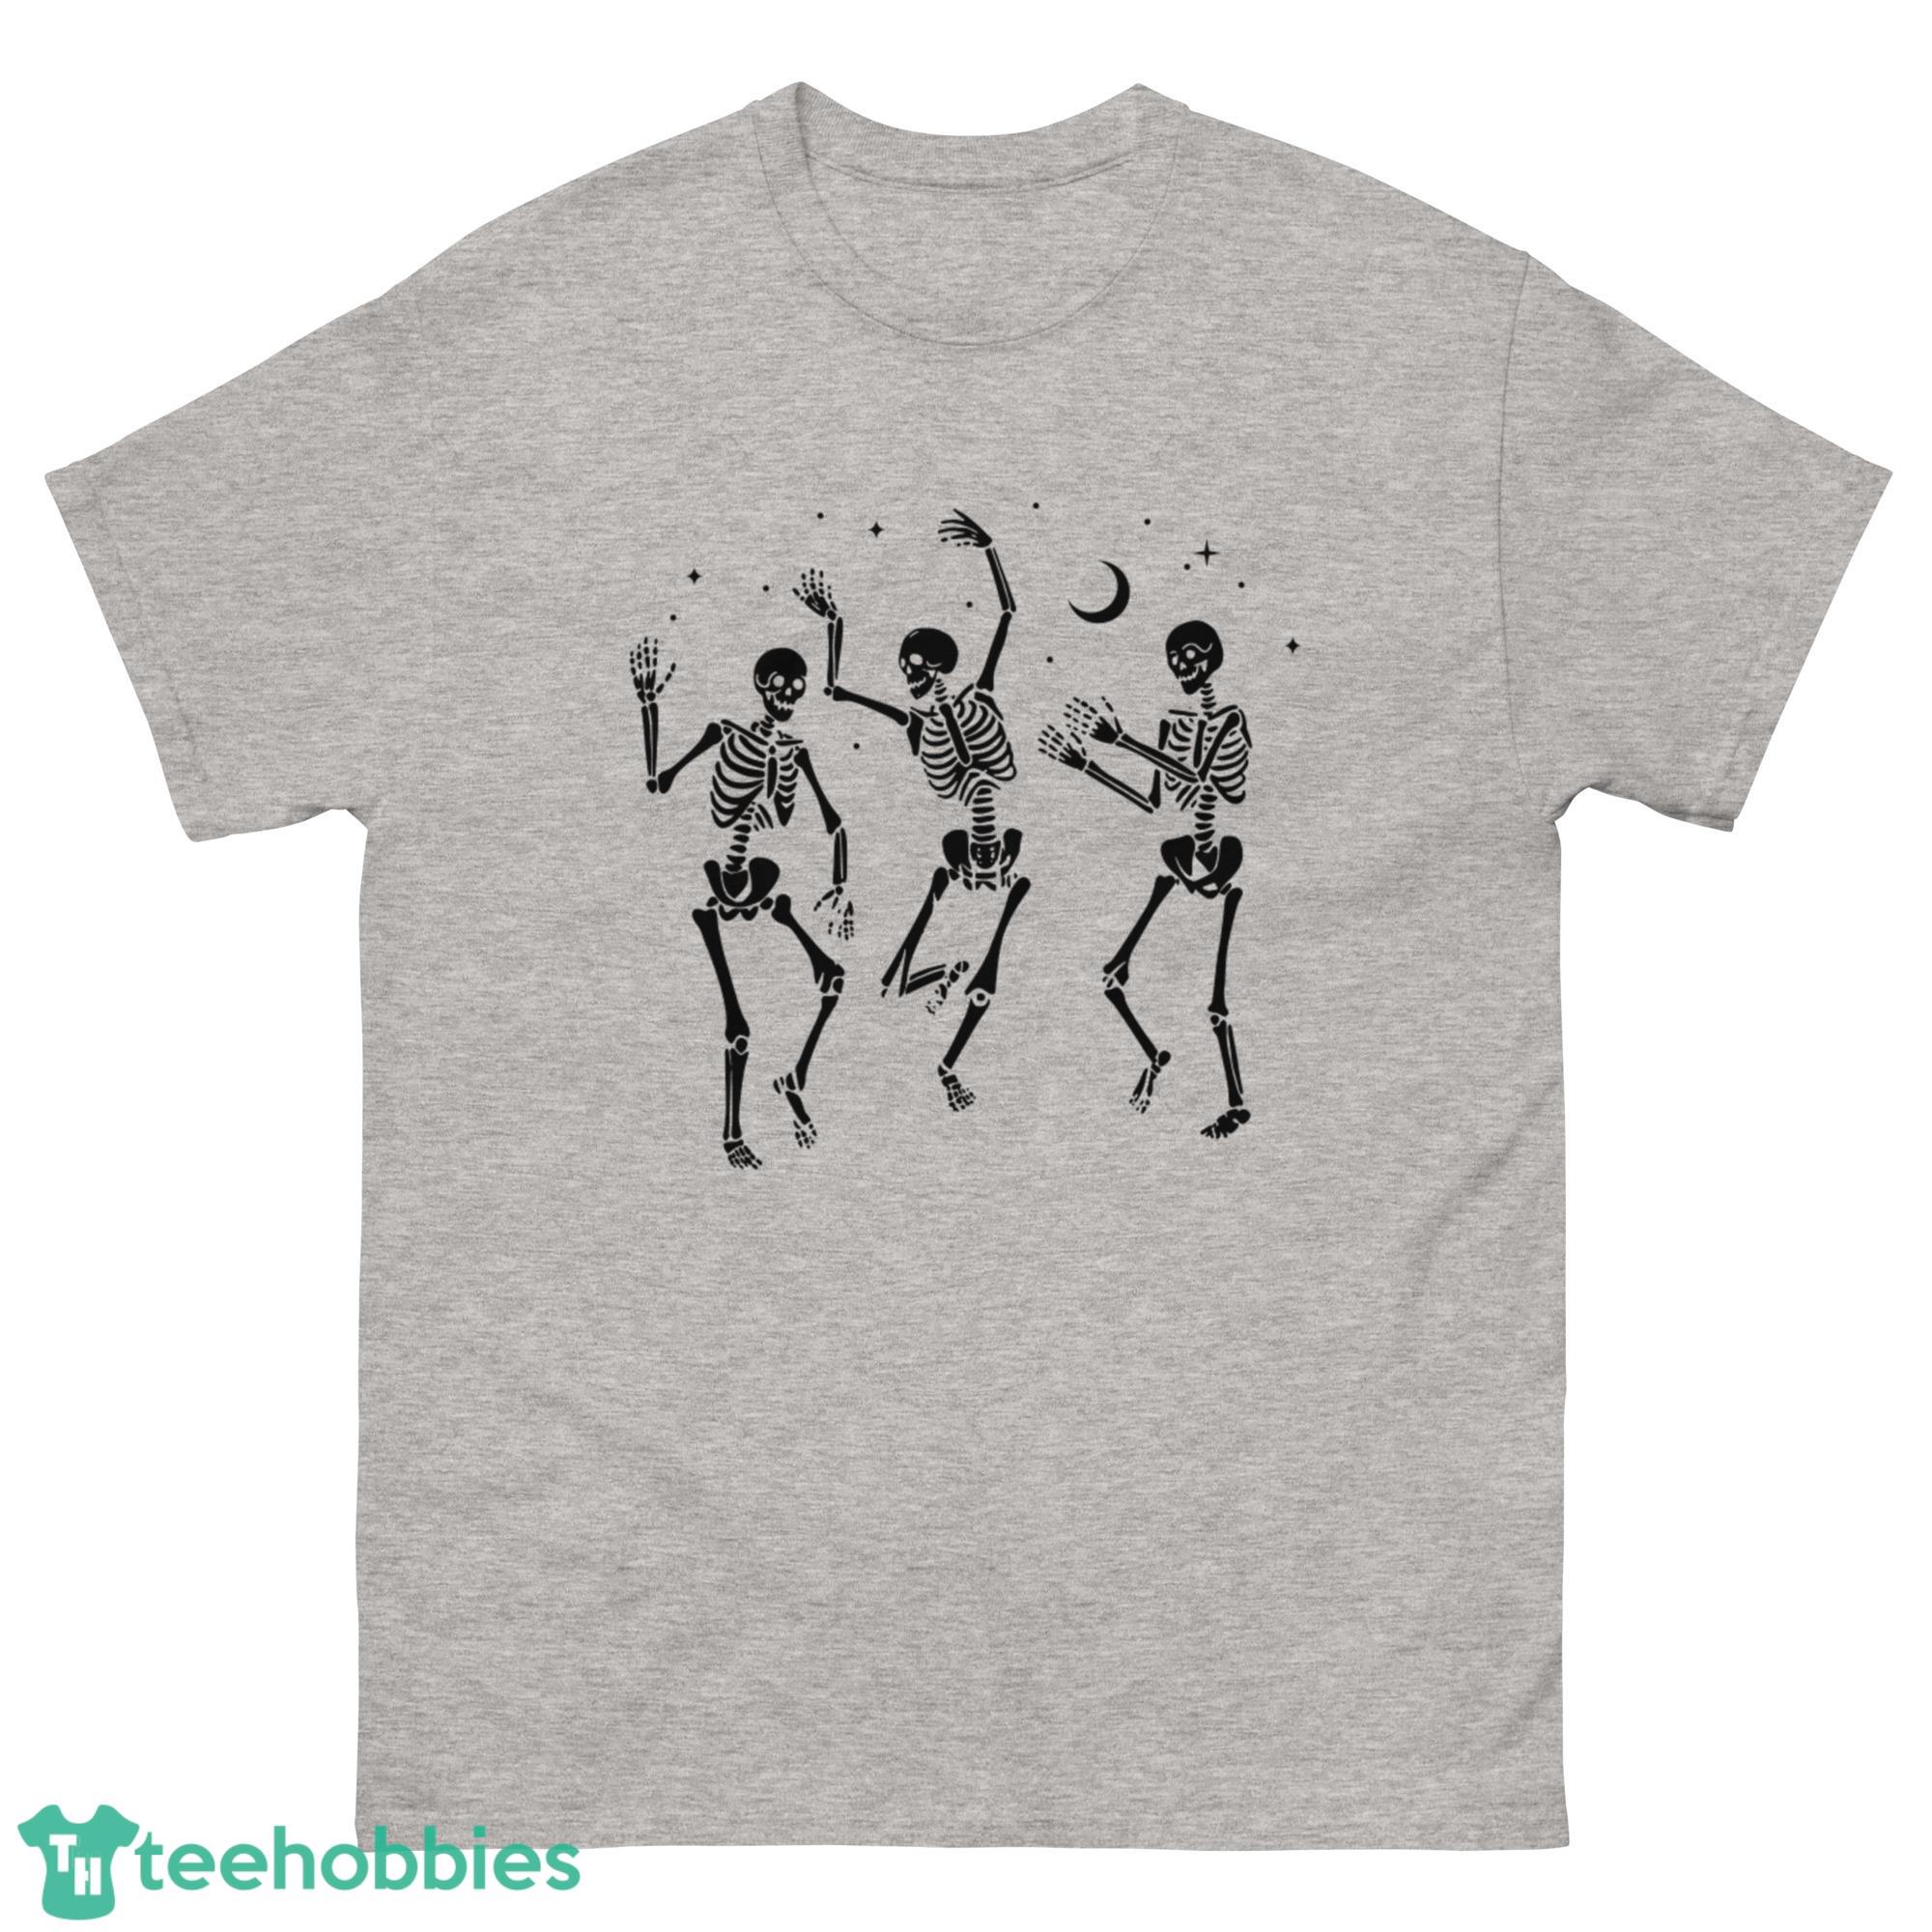 Halloween Party Dancing Skeleton Shirt - G500 Men’s Classic T-Shirt